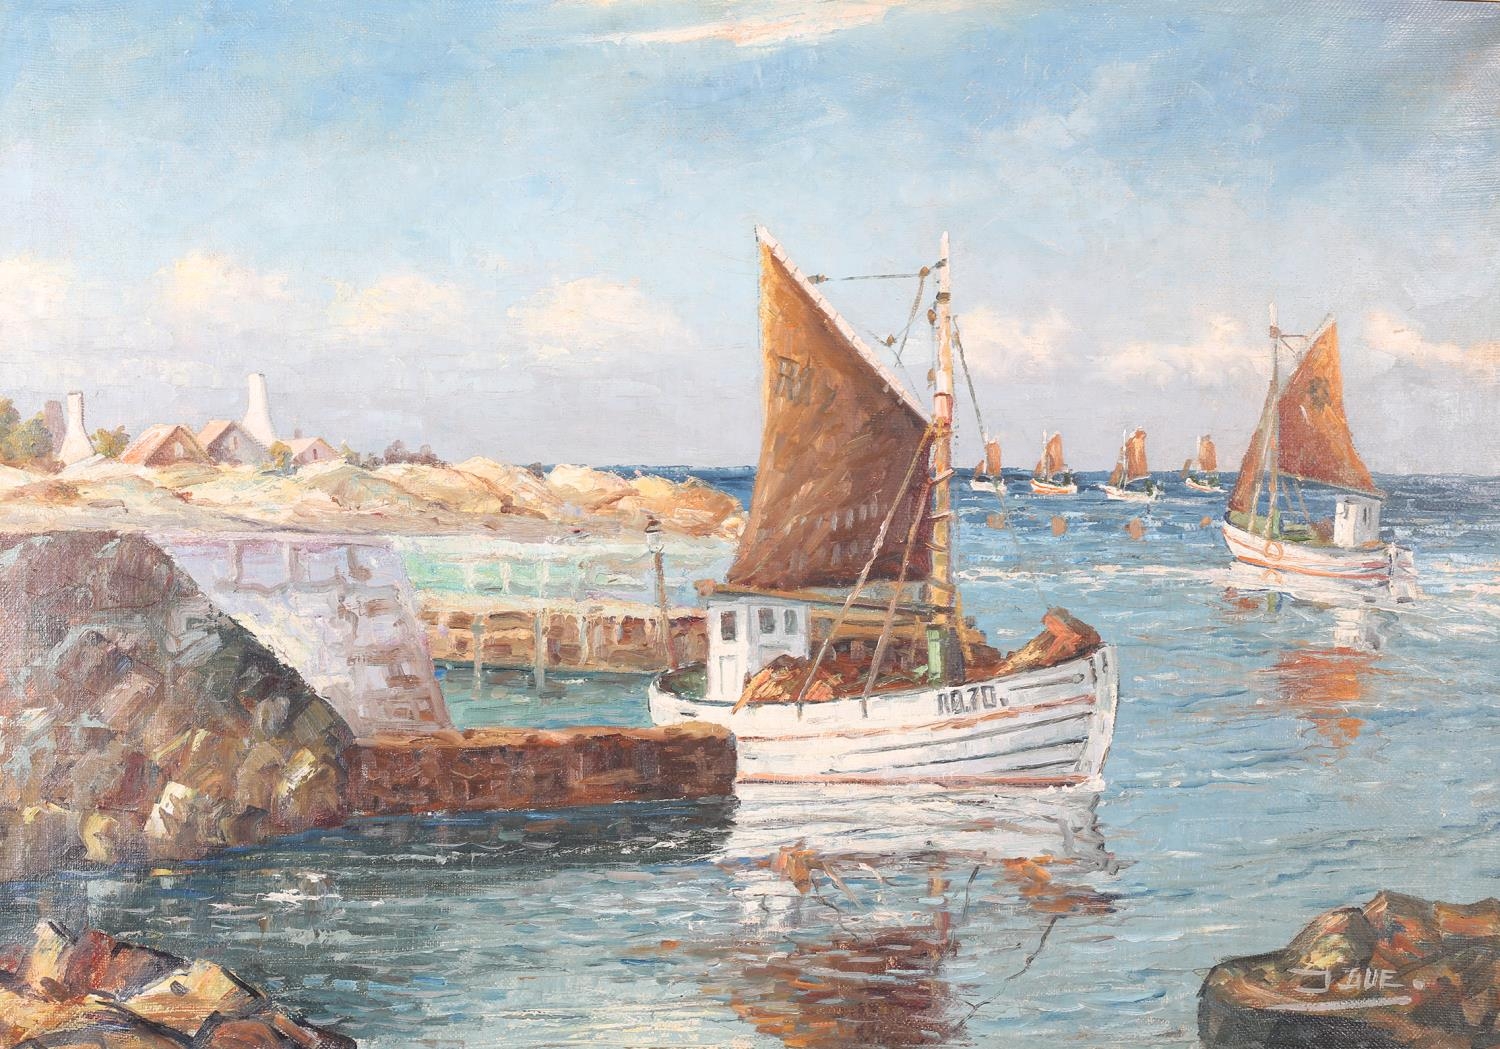 J*ue mid-20th century, Danish, Danish coastal scene with fishing boats heading out to sea, oil on